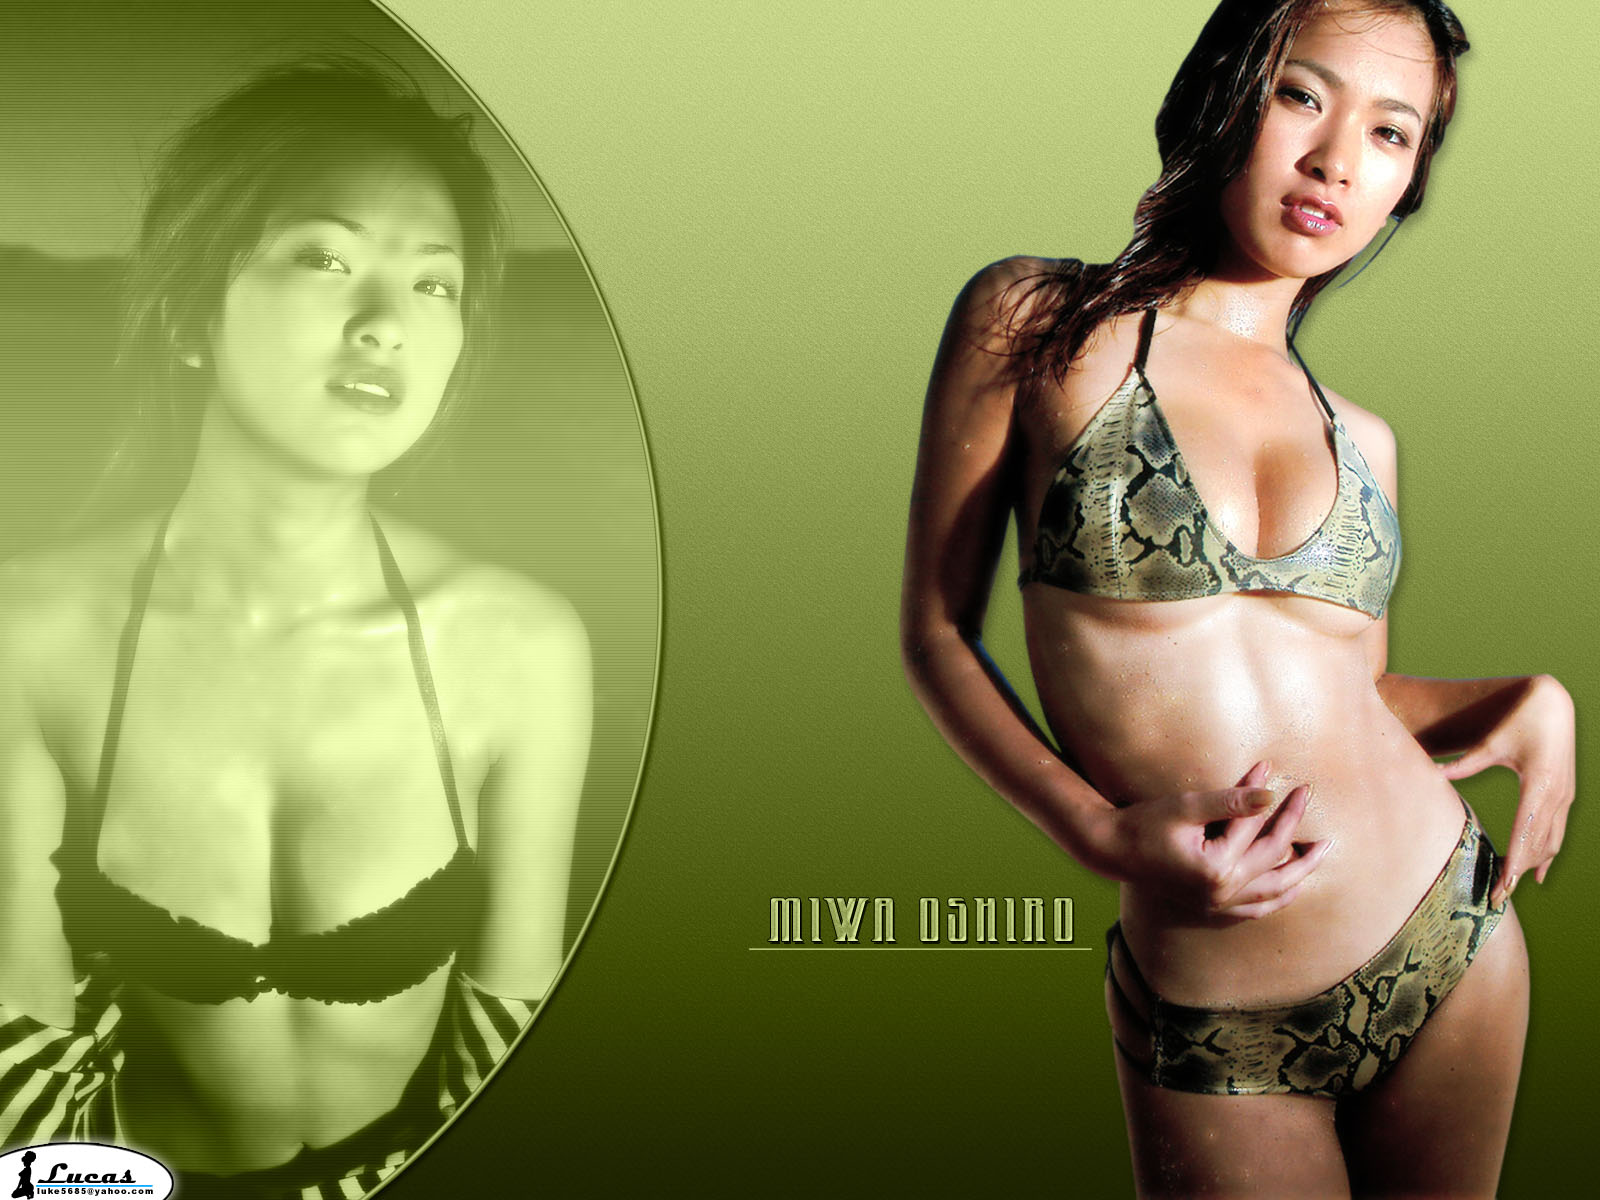 Download full size Miwa Ohshiro wallpaper / Celebrities Female / 1600x1200